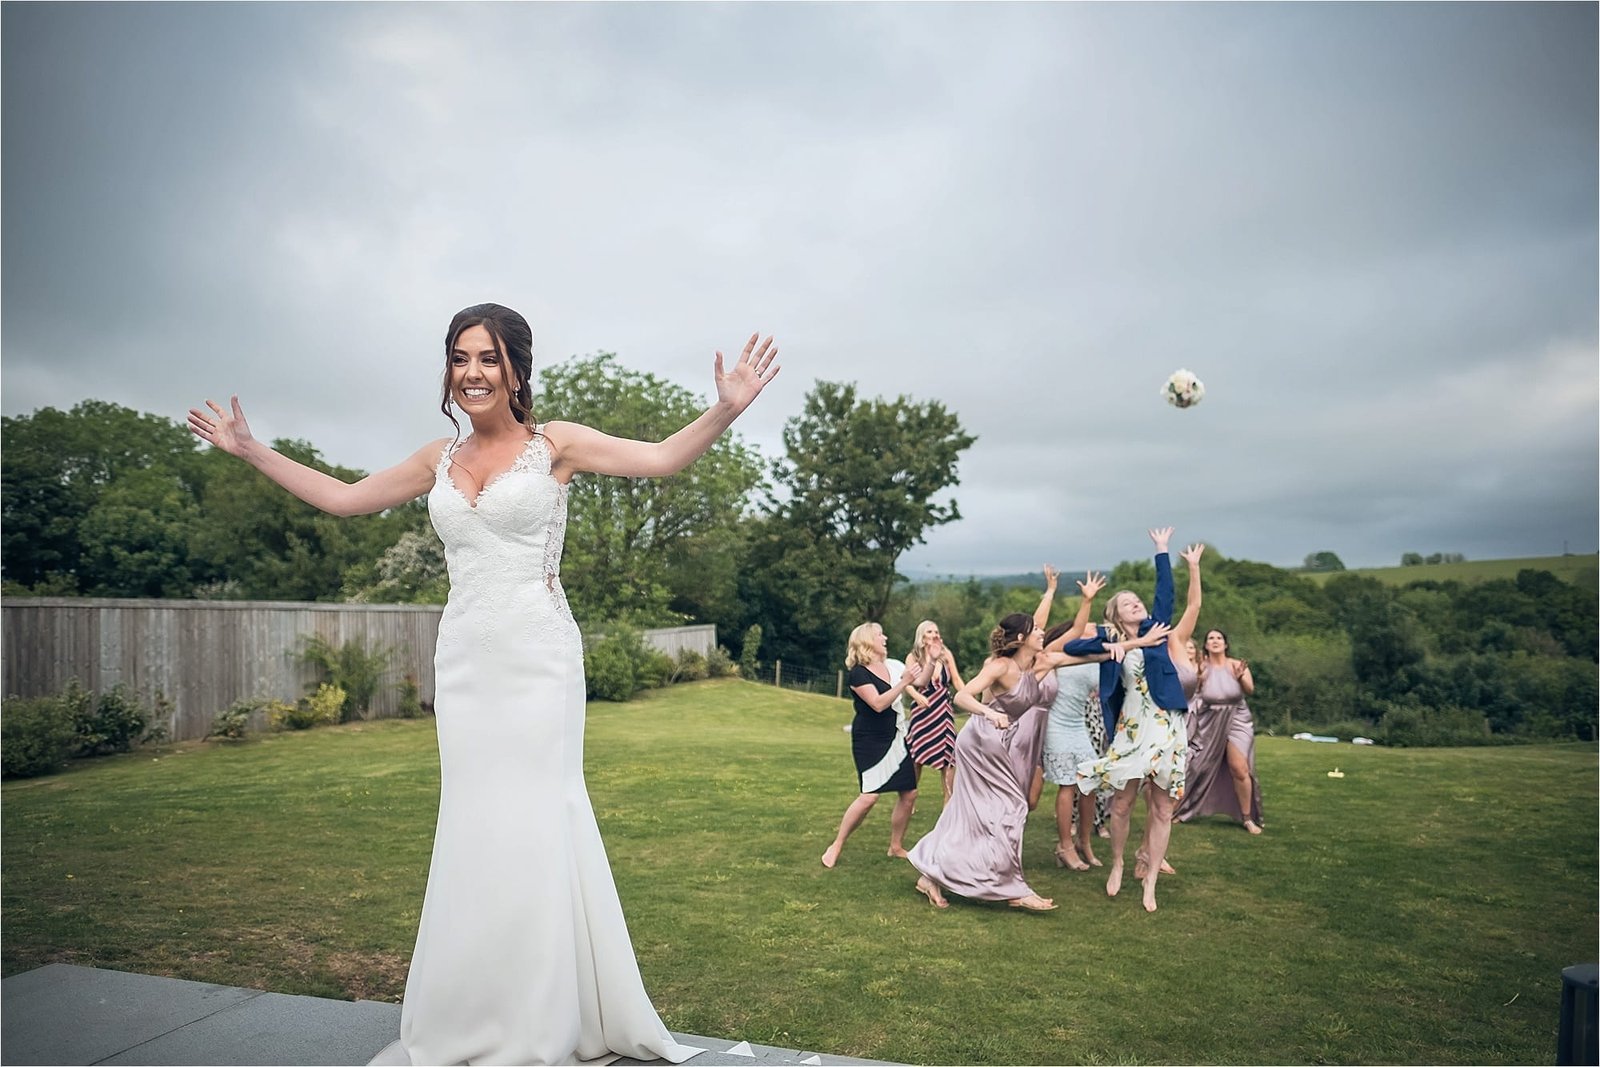 The Green wedding in Cornwall